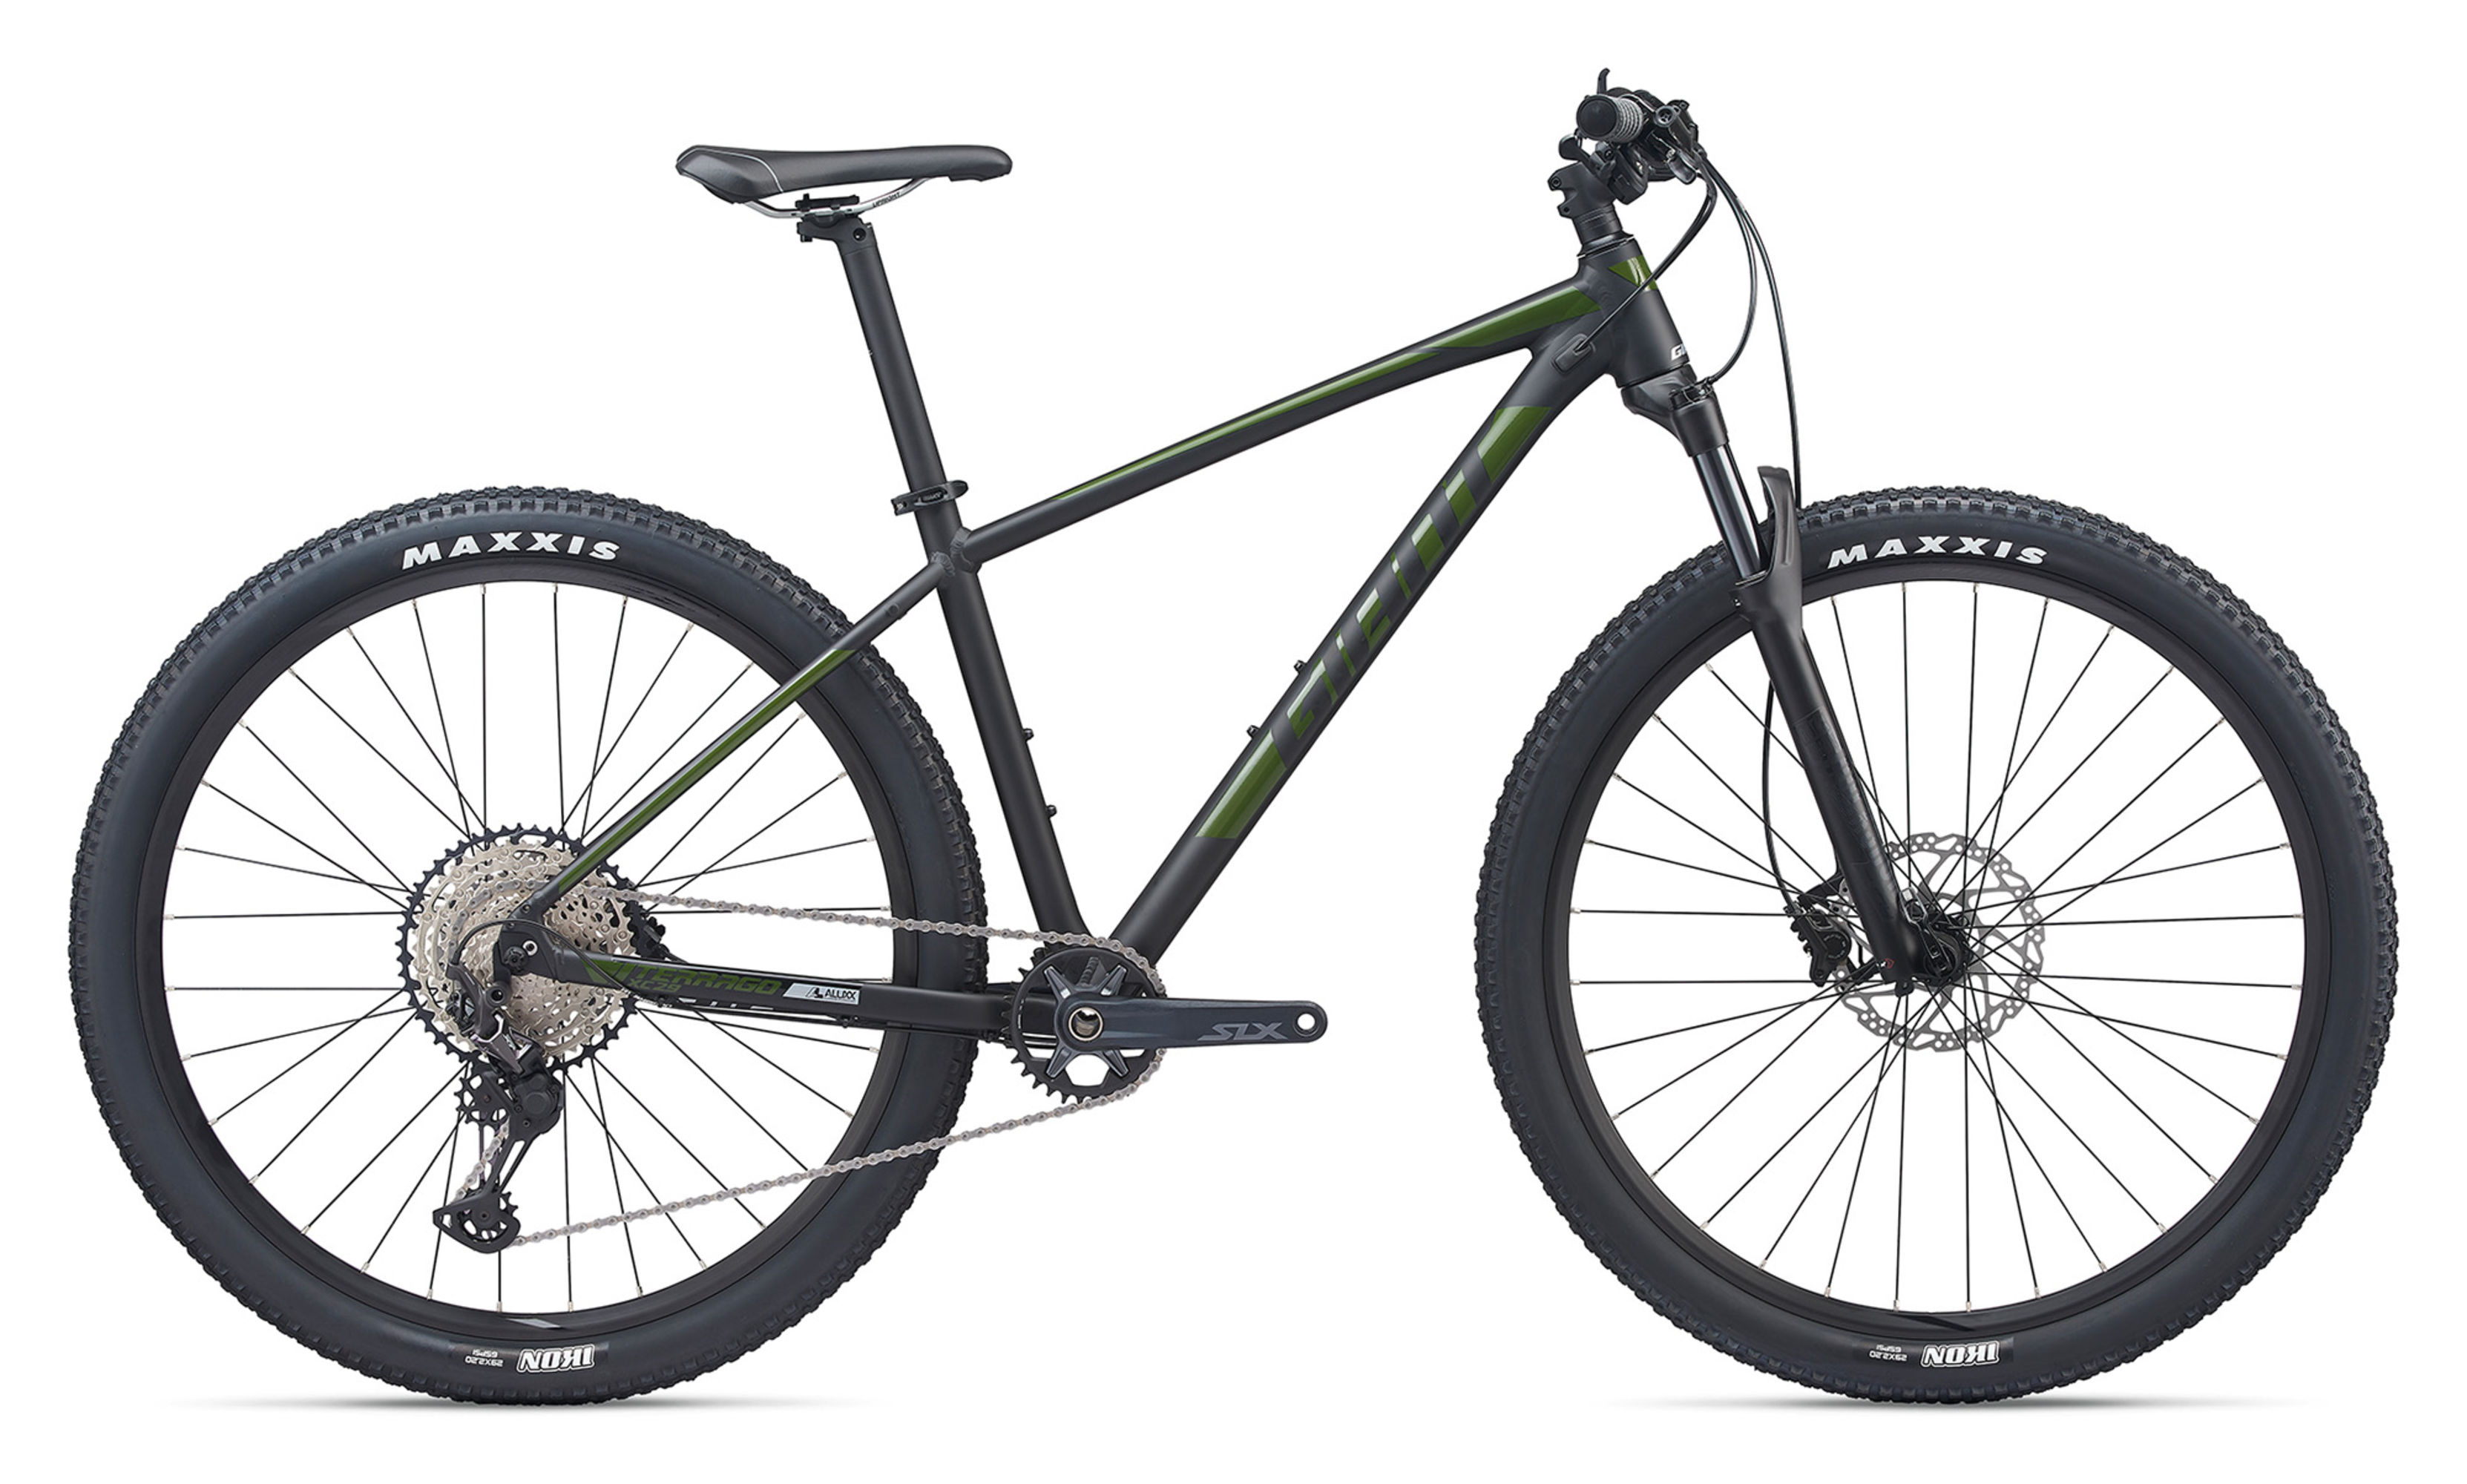  Отзывы о Горном велосипеде Giant Terrago 29 1 2020